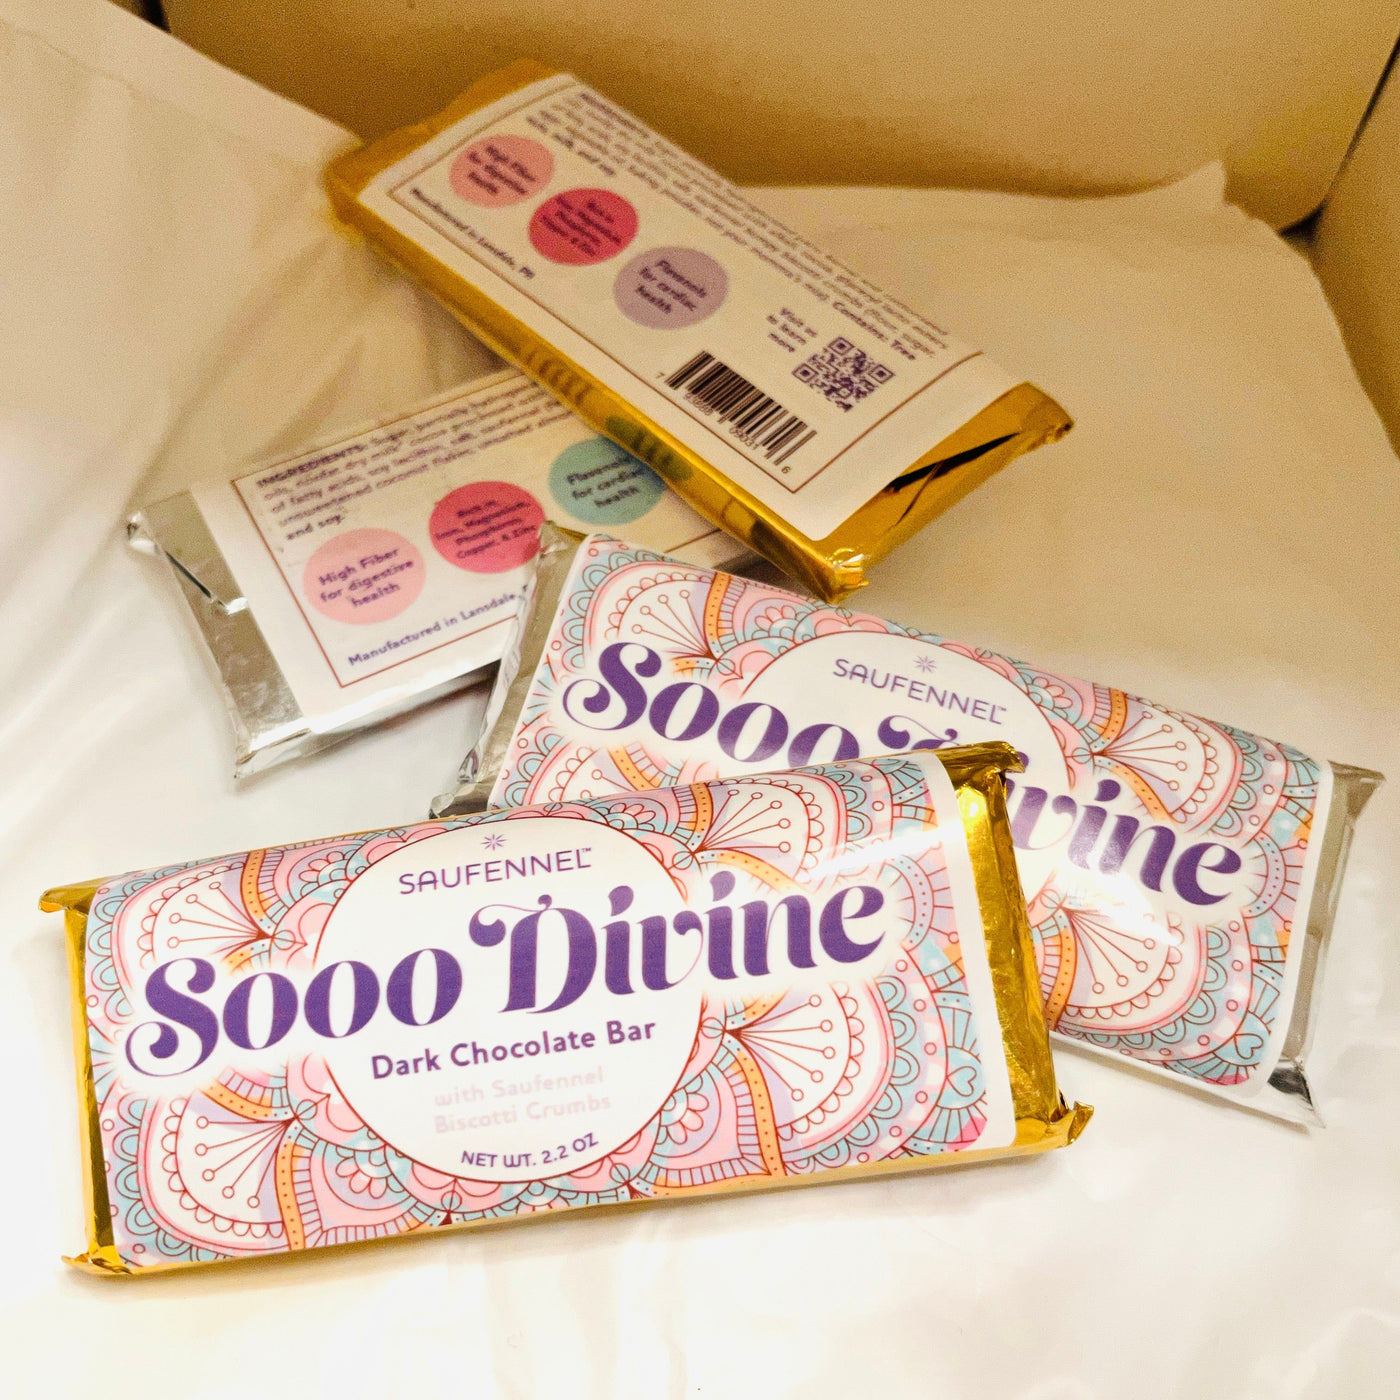 Sooo Divine Dark Chocolate Bar With Biscotti Crumbs